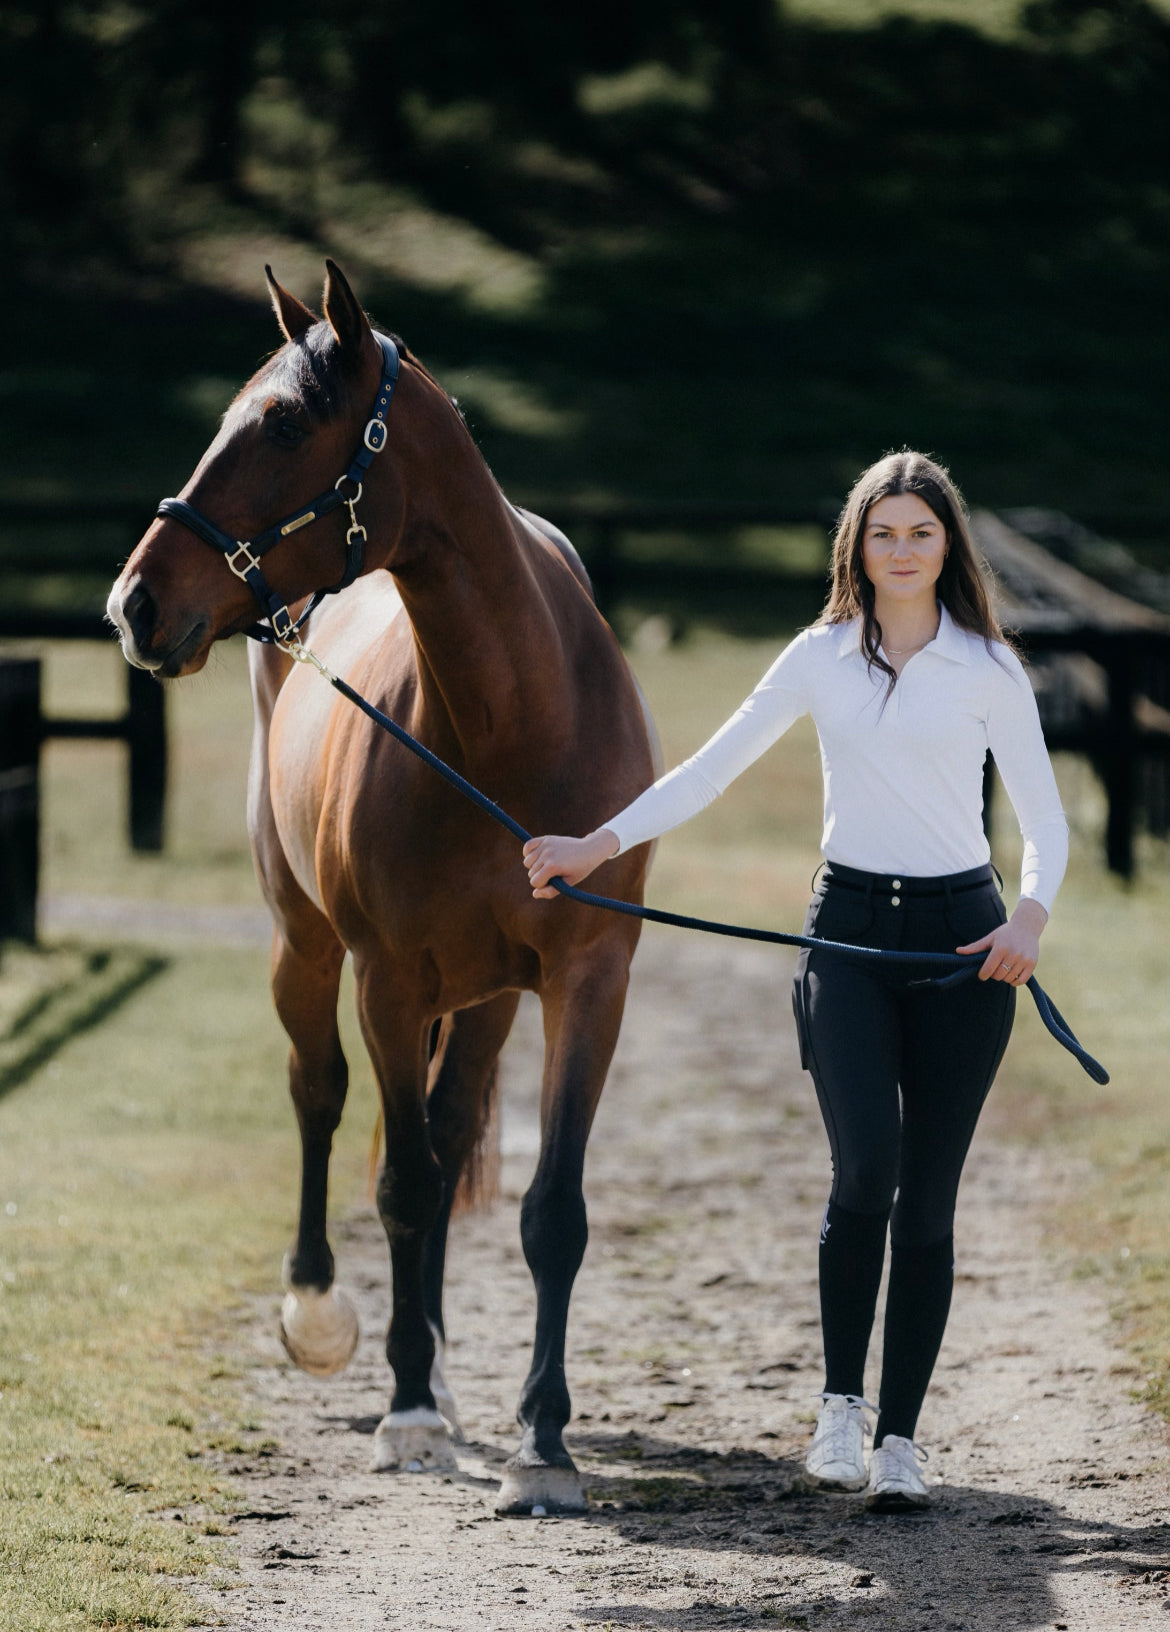 Aspin & Co - New Zealand Equestrian Apparel Brand